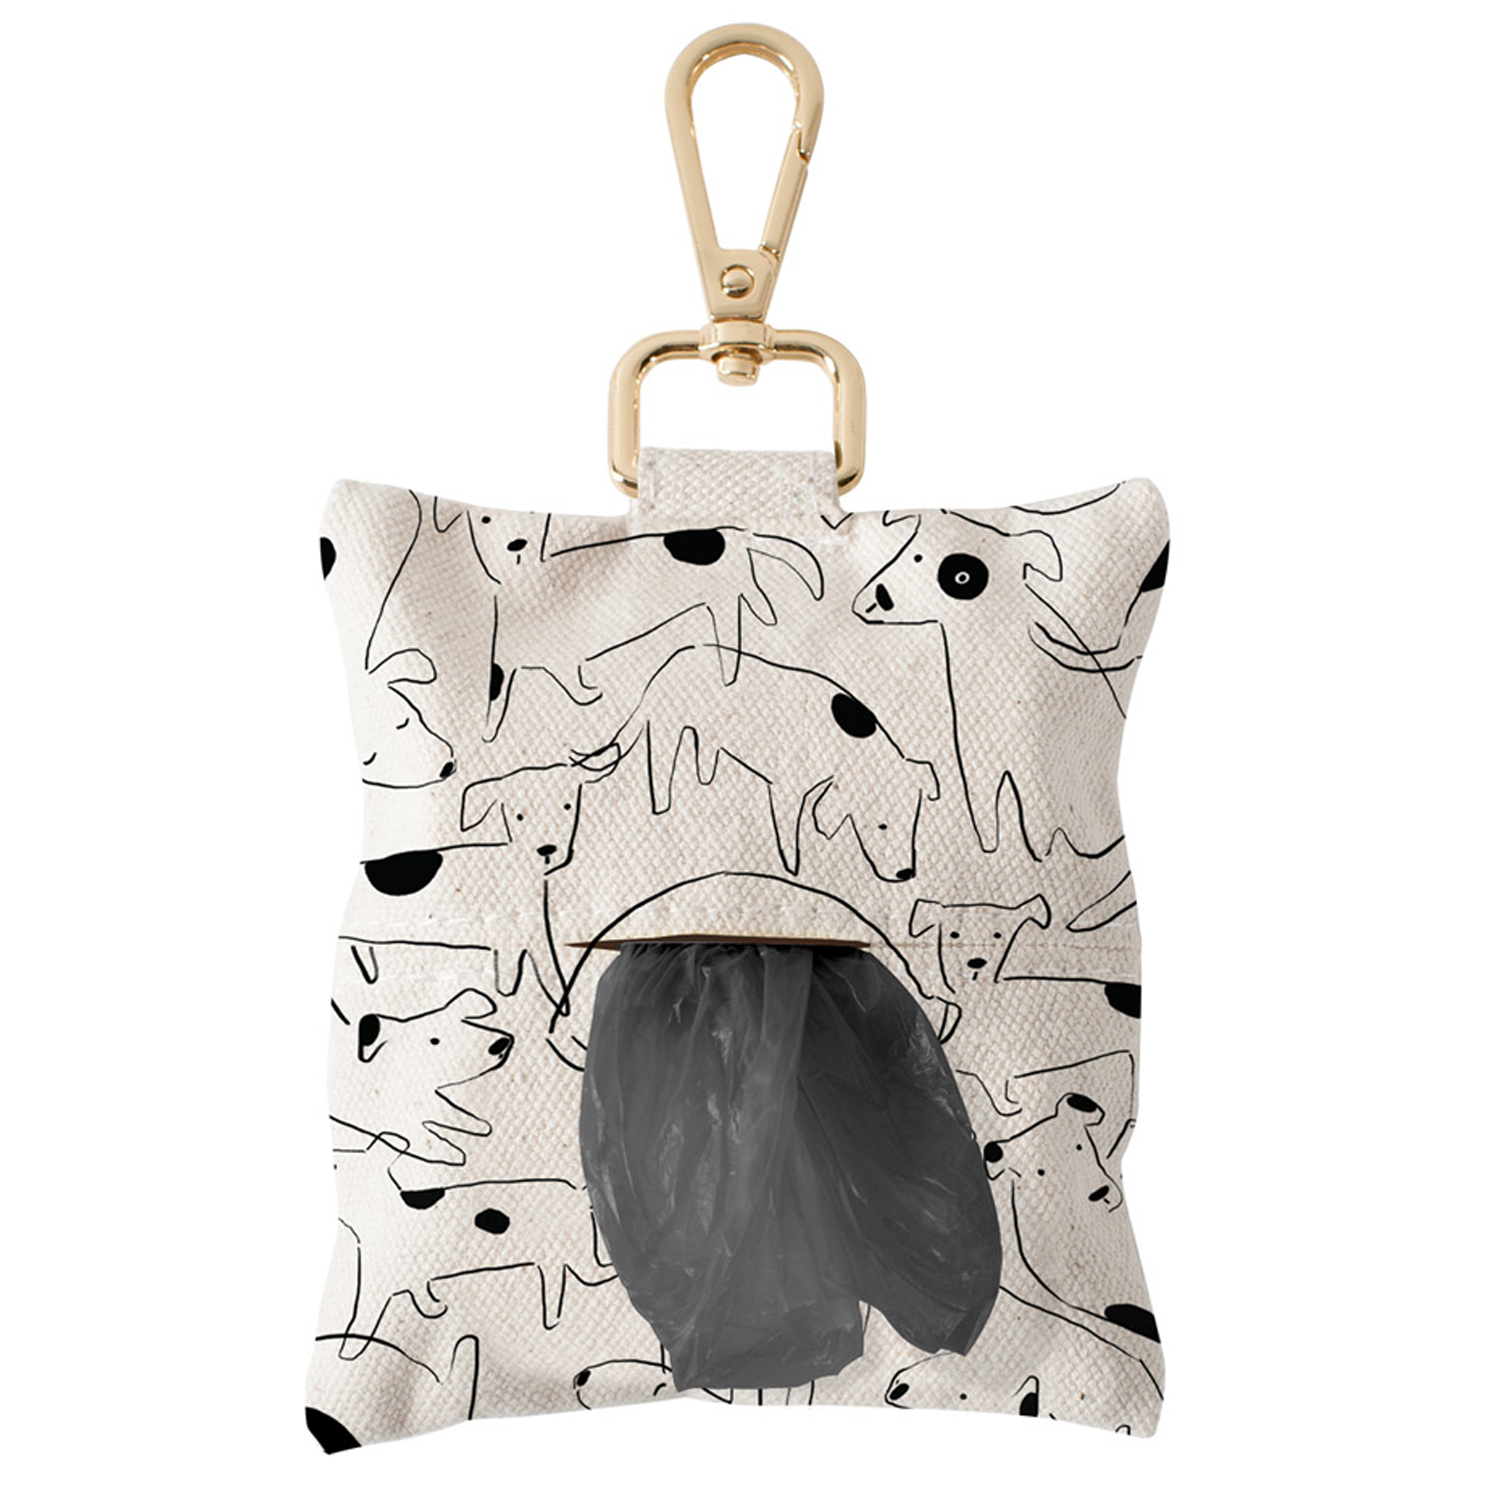 Dog Sanitary Accessories - Nosy Dog Canvas Poop Bag Dispenser by Fringe Studio